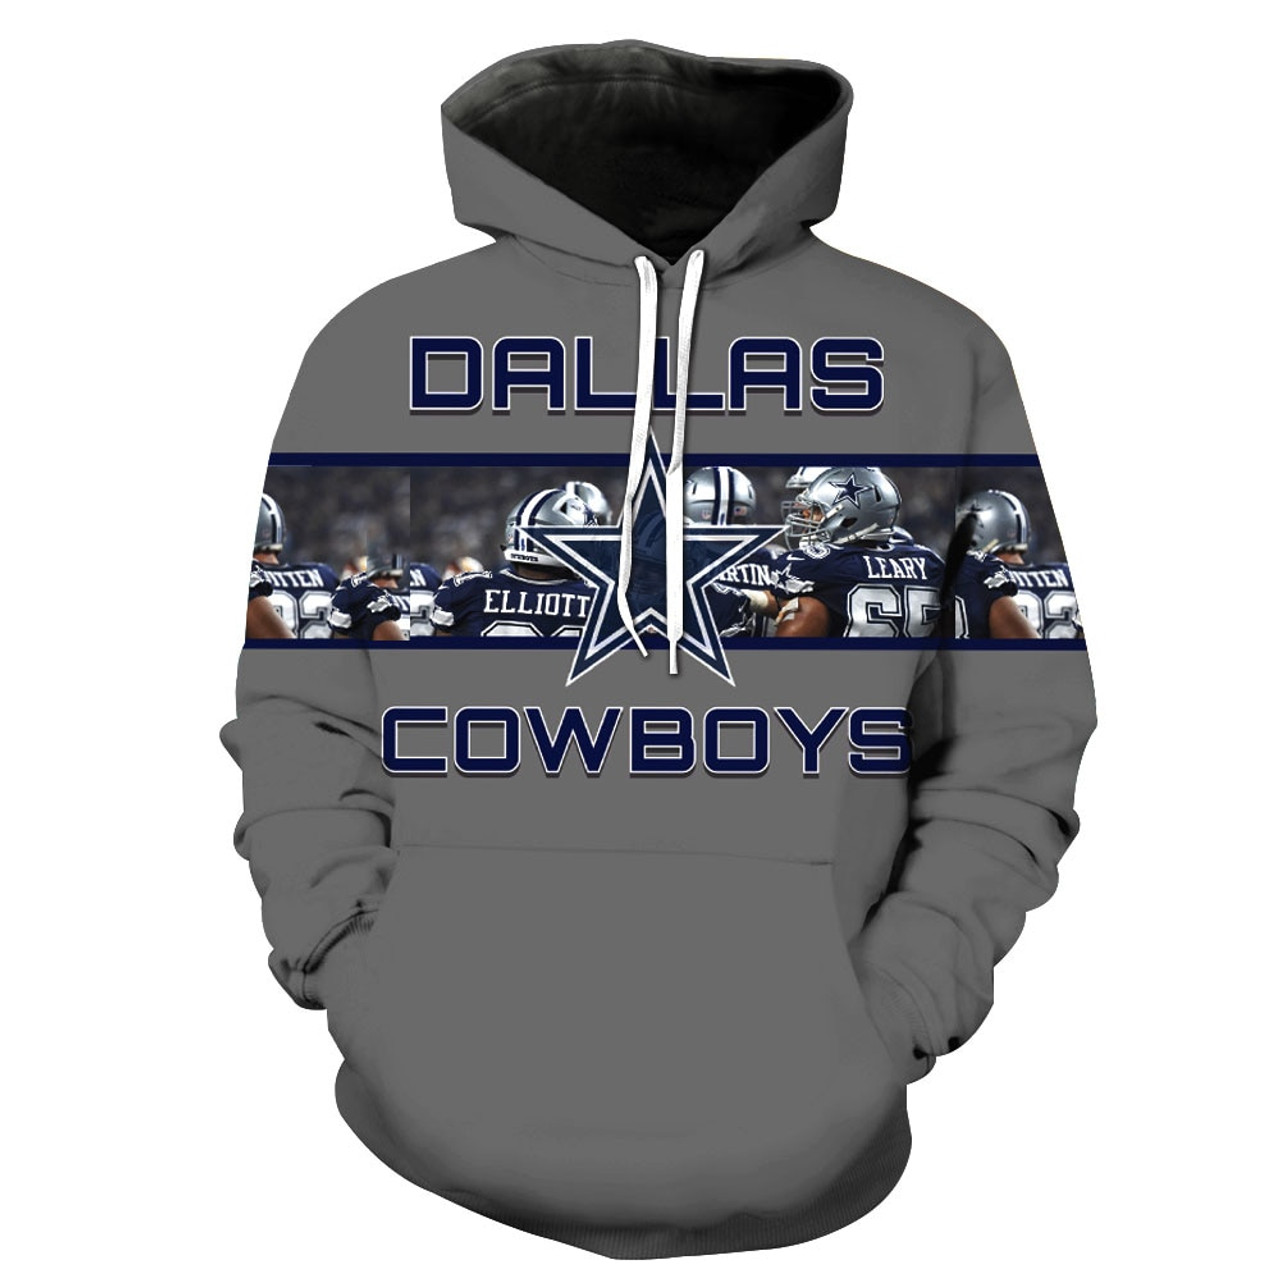 new dallas cowboys hoodie